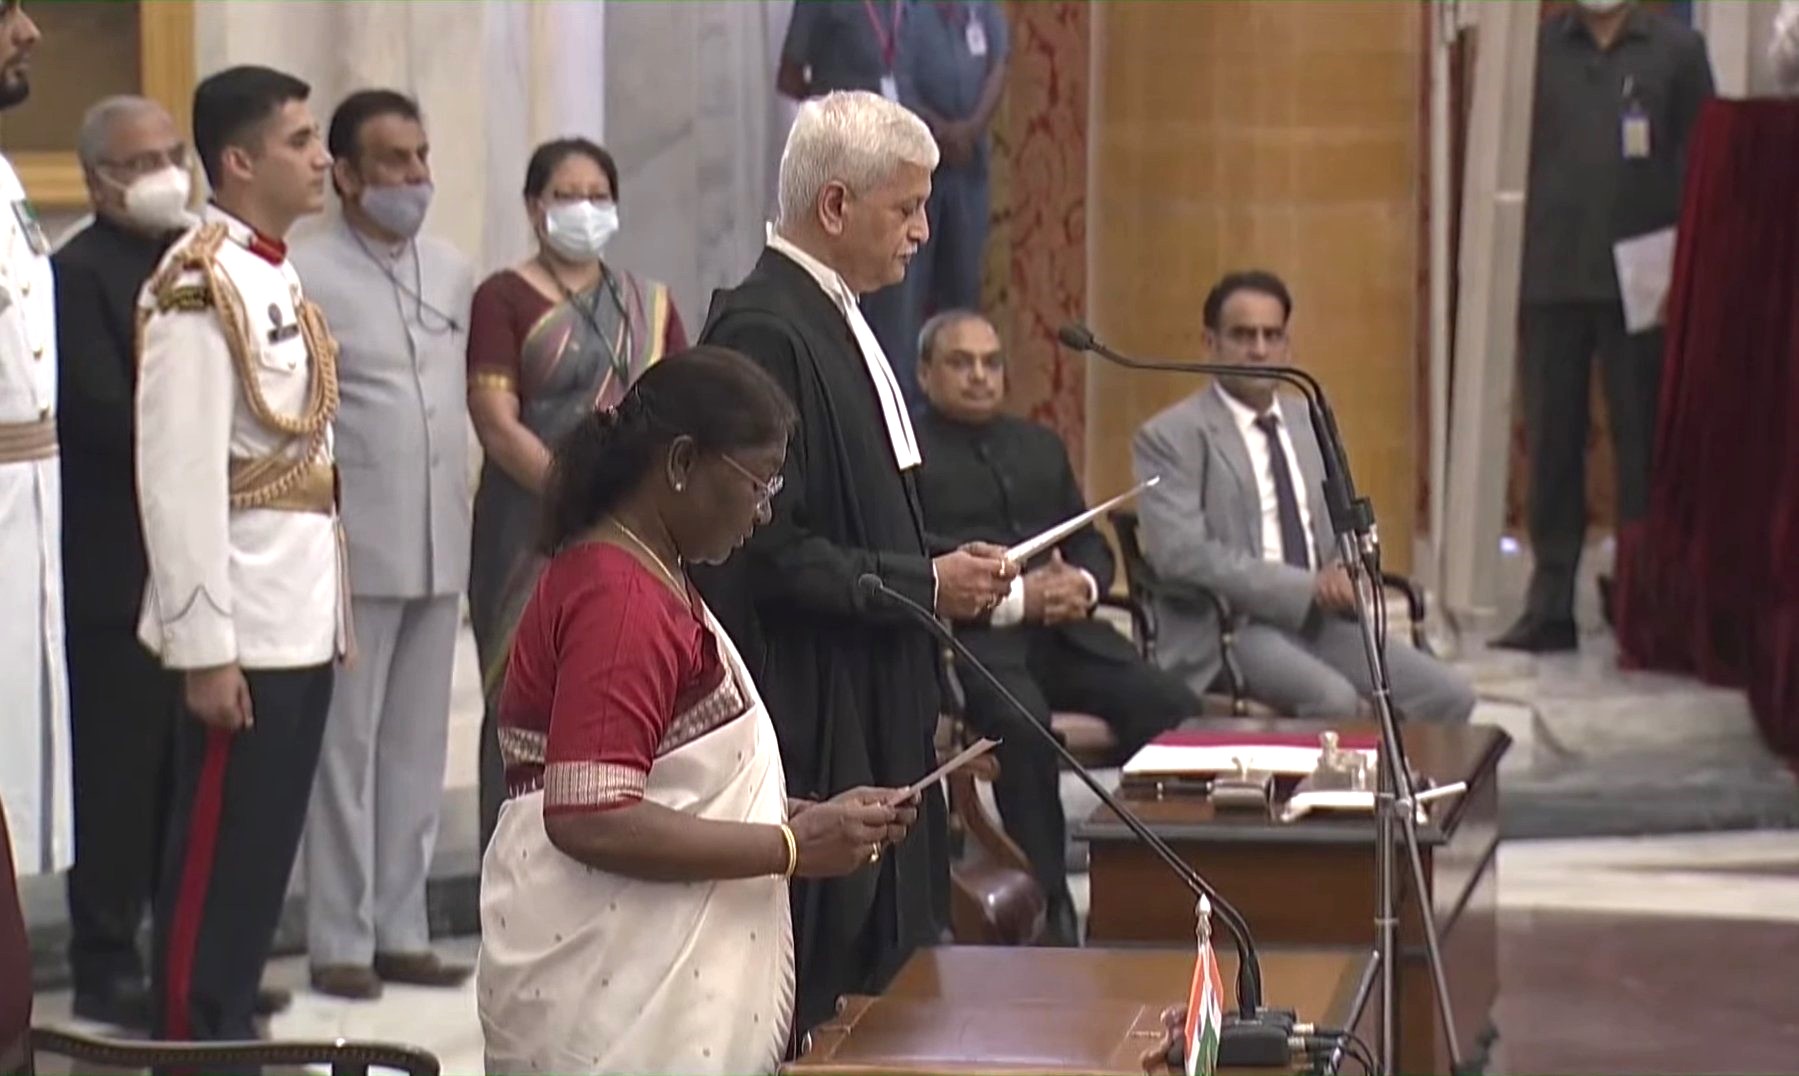 Justice Uday Umesh Lalit sworn-in as 49th Chief Justice of India. President Draupadi Murmu administered him oath as the 49th Chief Justice of India at Rashtrapati Bhawan.